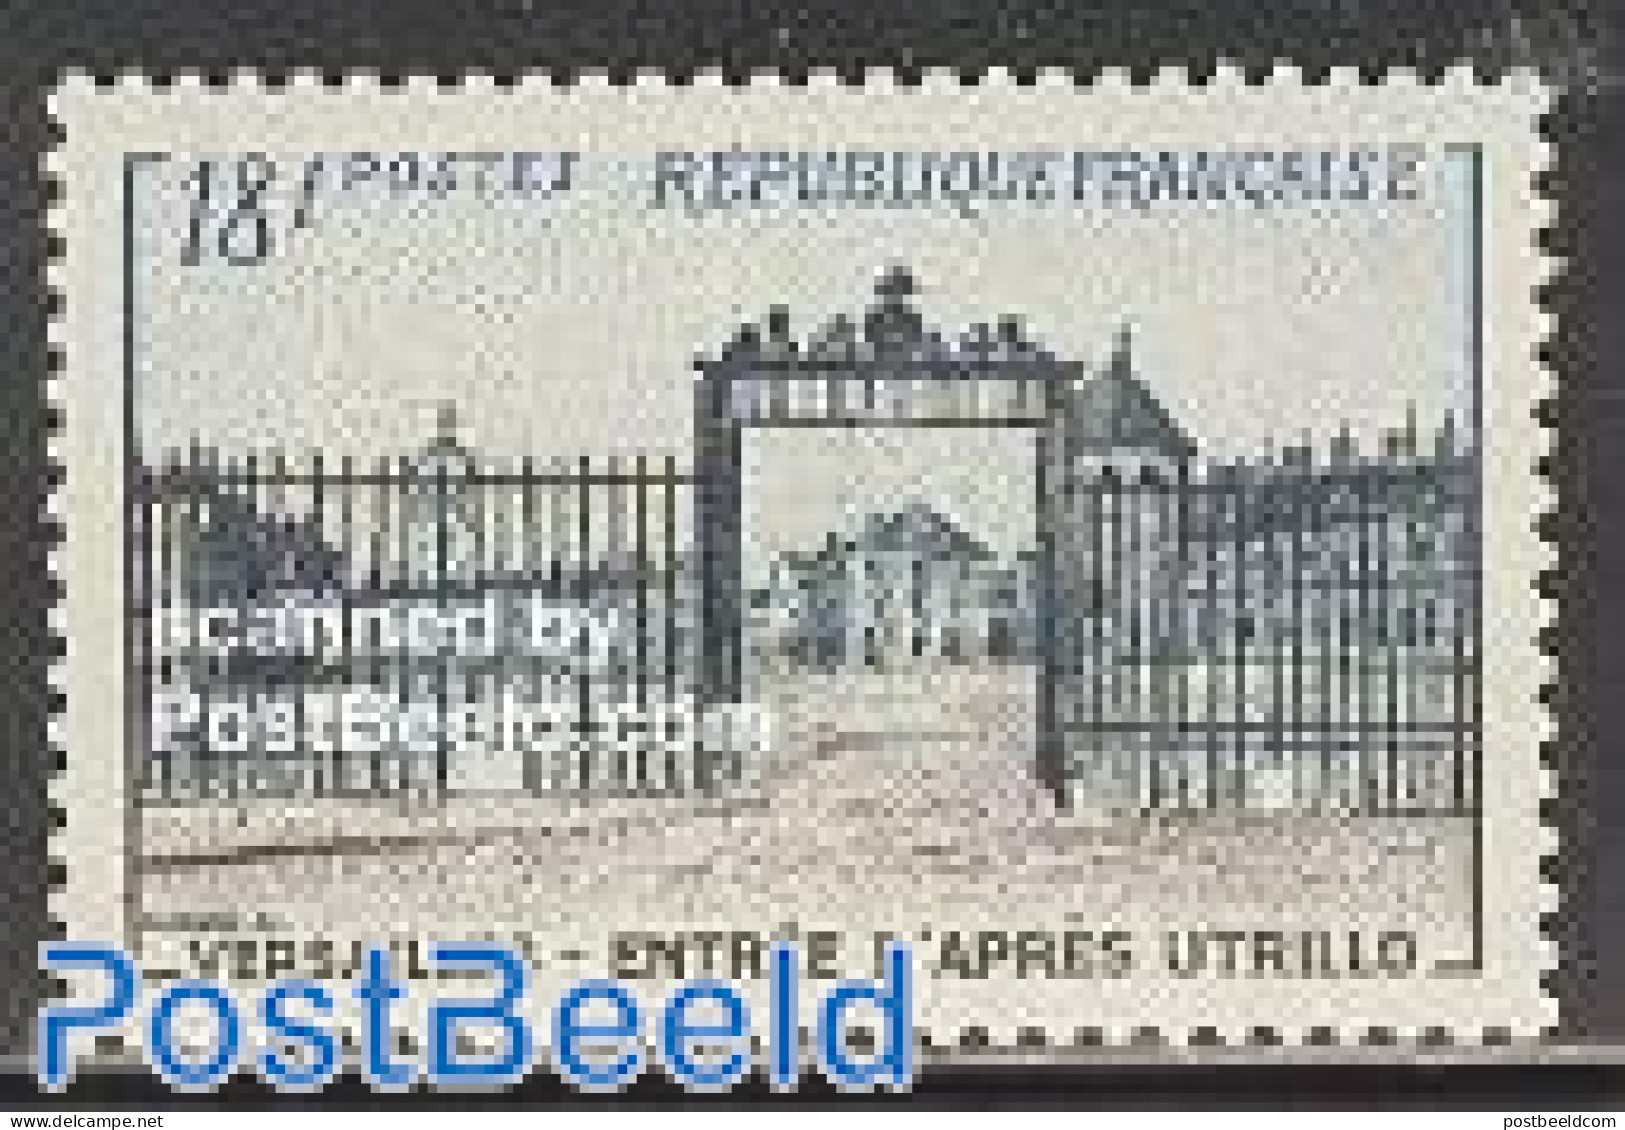 France 1954 Versailles 1v, Mint NH, Art - Castles & Fortifications - Ungebraucht